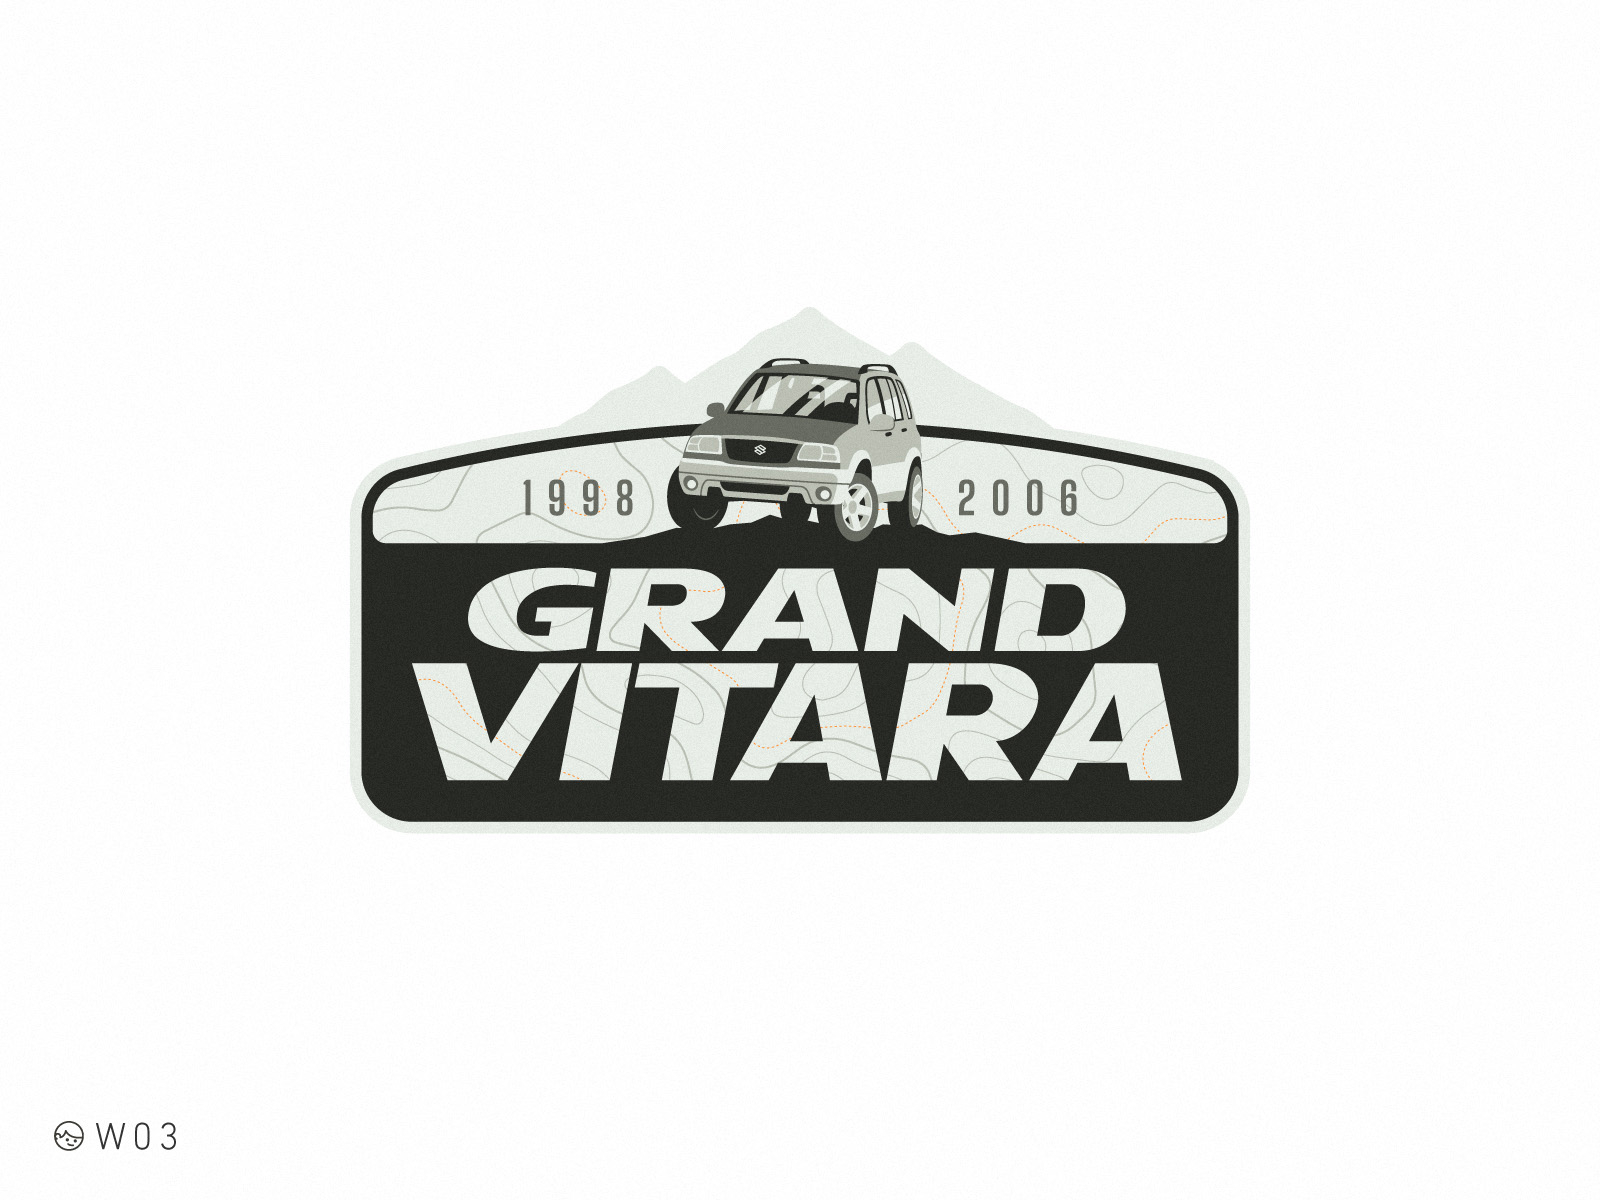 W03 Suzuki Grand Vitara by Gustavo Zambelli on Dribbble